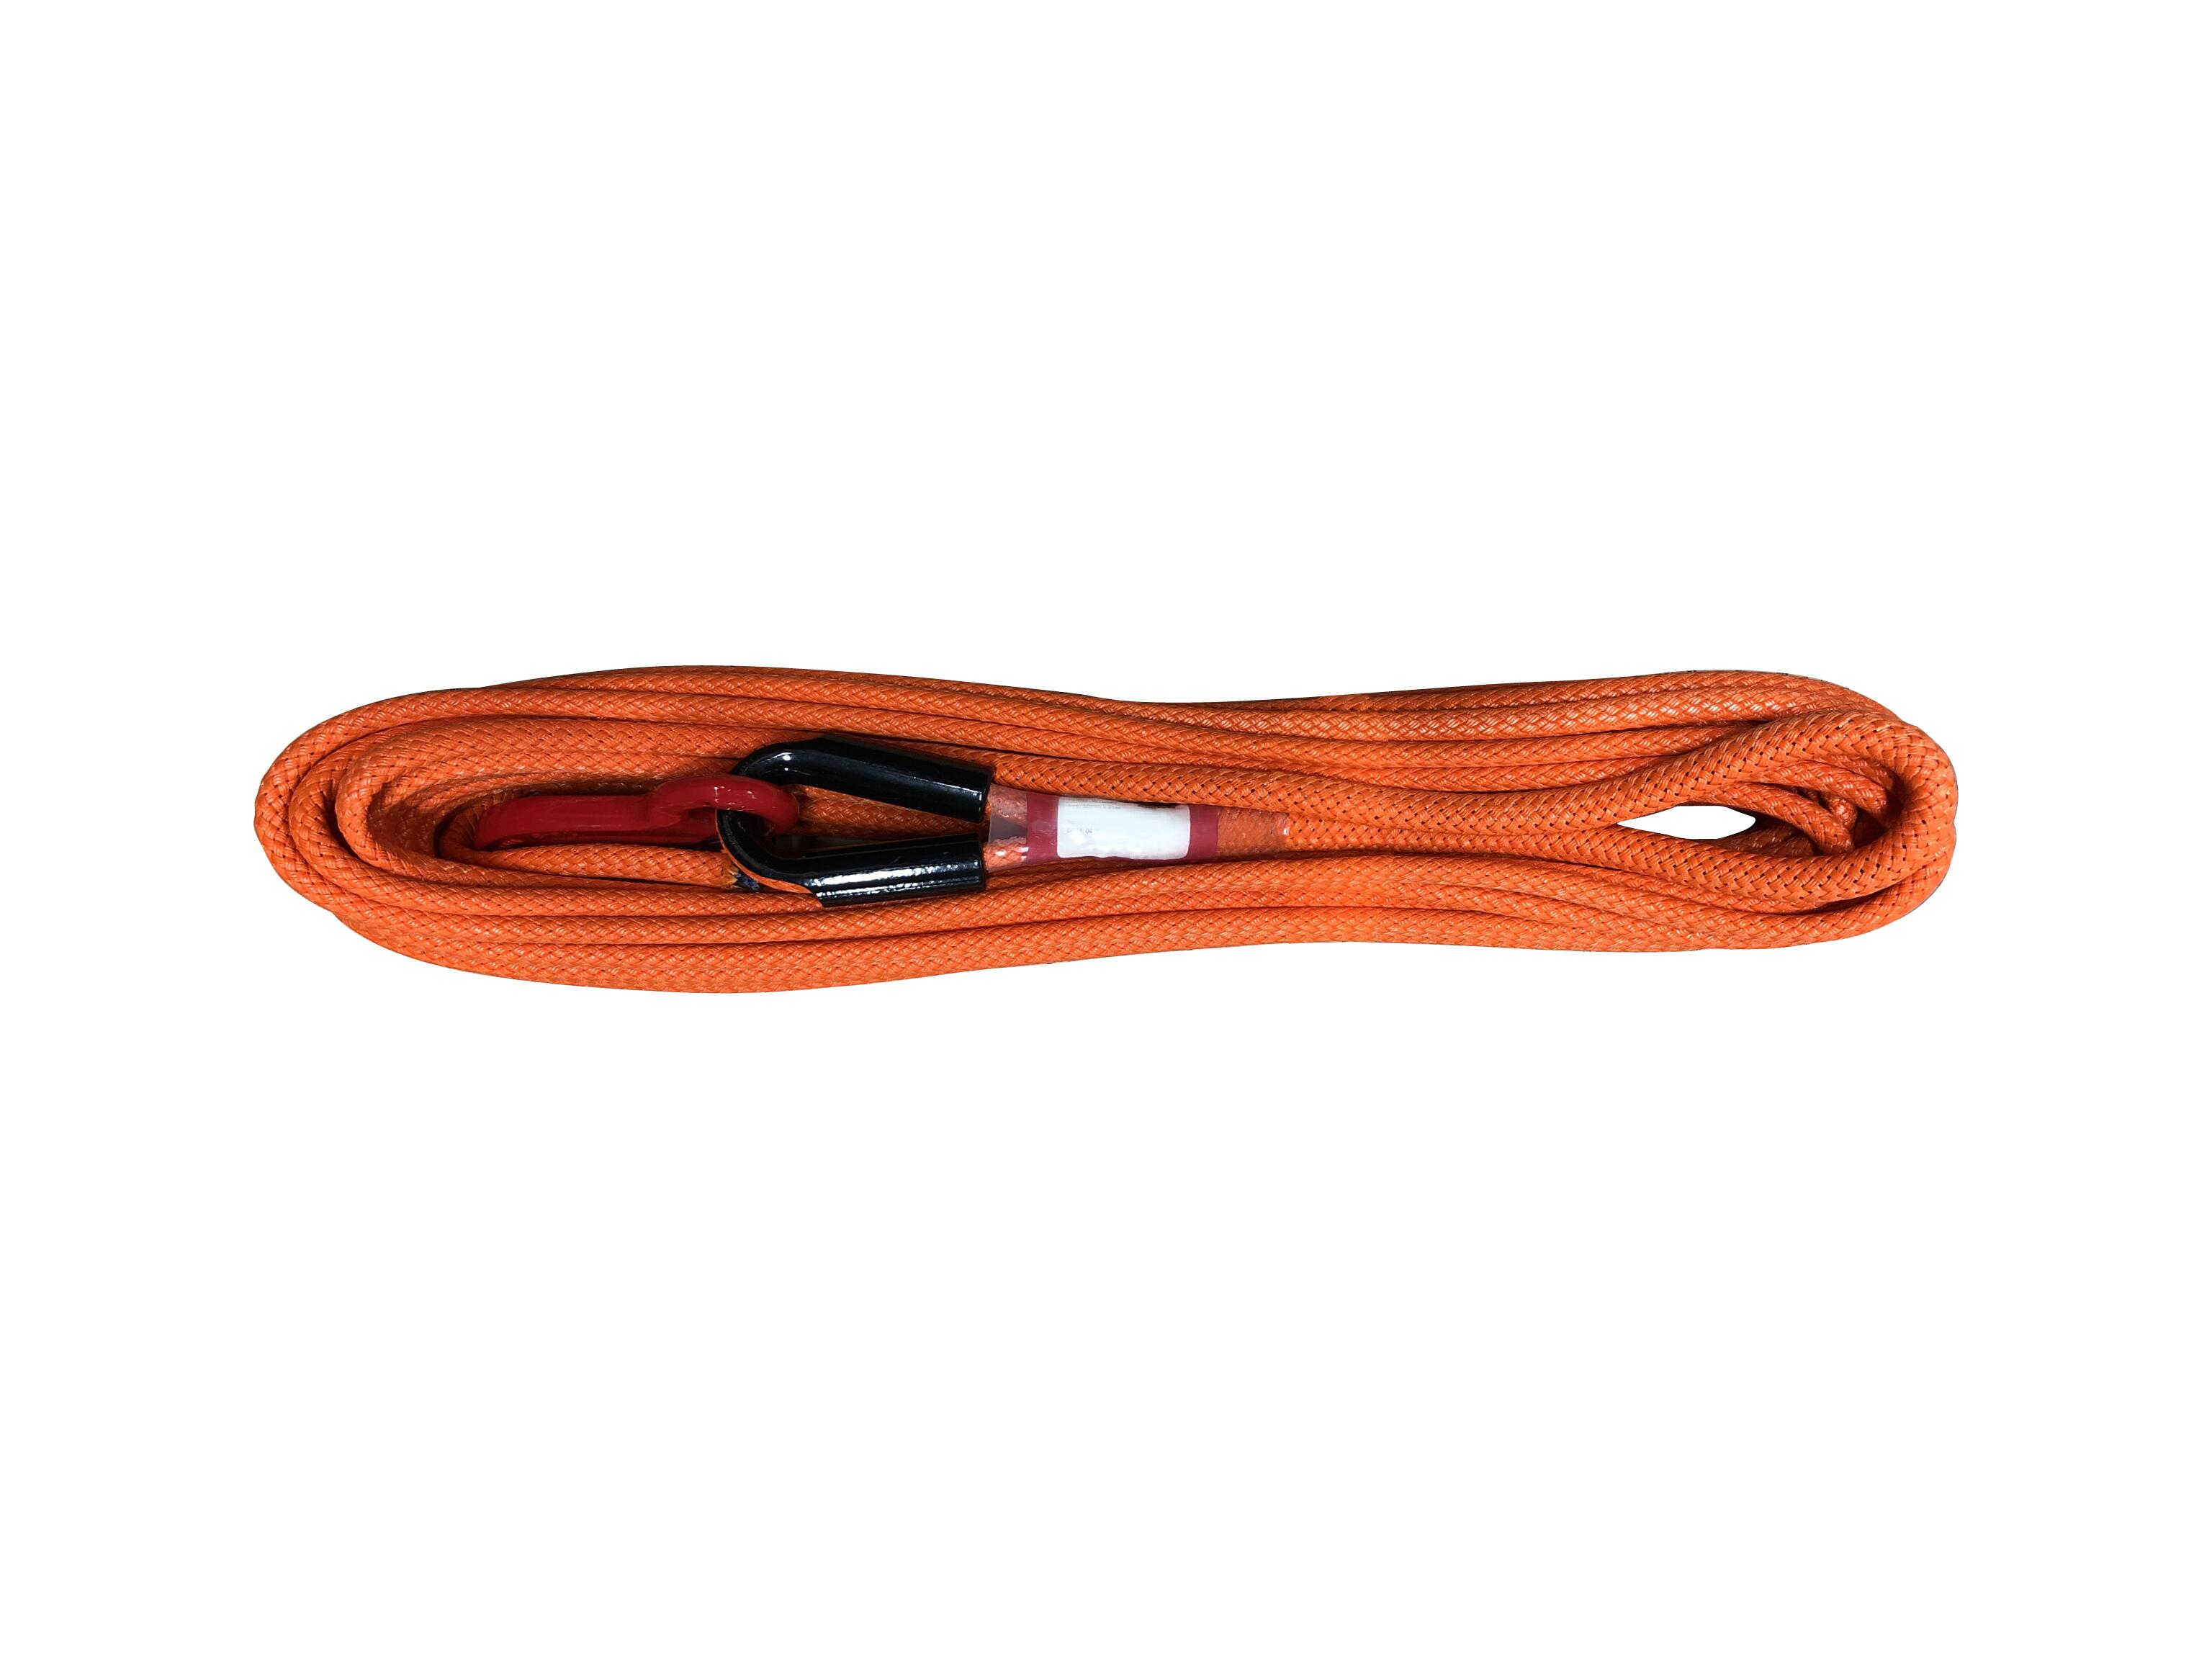 Marlow rope マローロープ 9mm x 30m オレンジ色 高品質 Dyneema ダイニーマ使用 ロープ業界トップ イギリス マロー社製 合成繊維ロープ レッカー車 積載車用